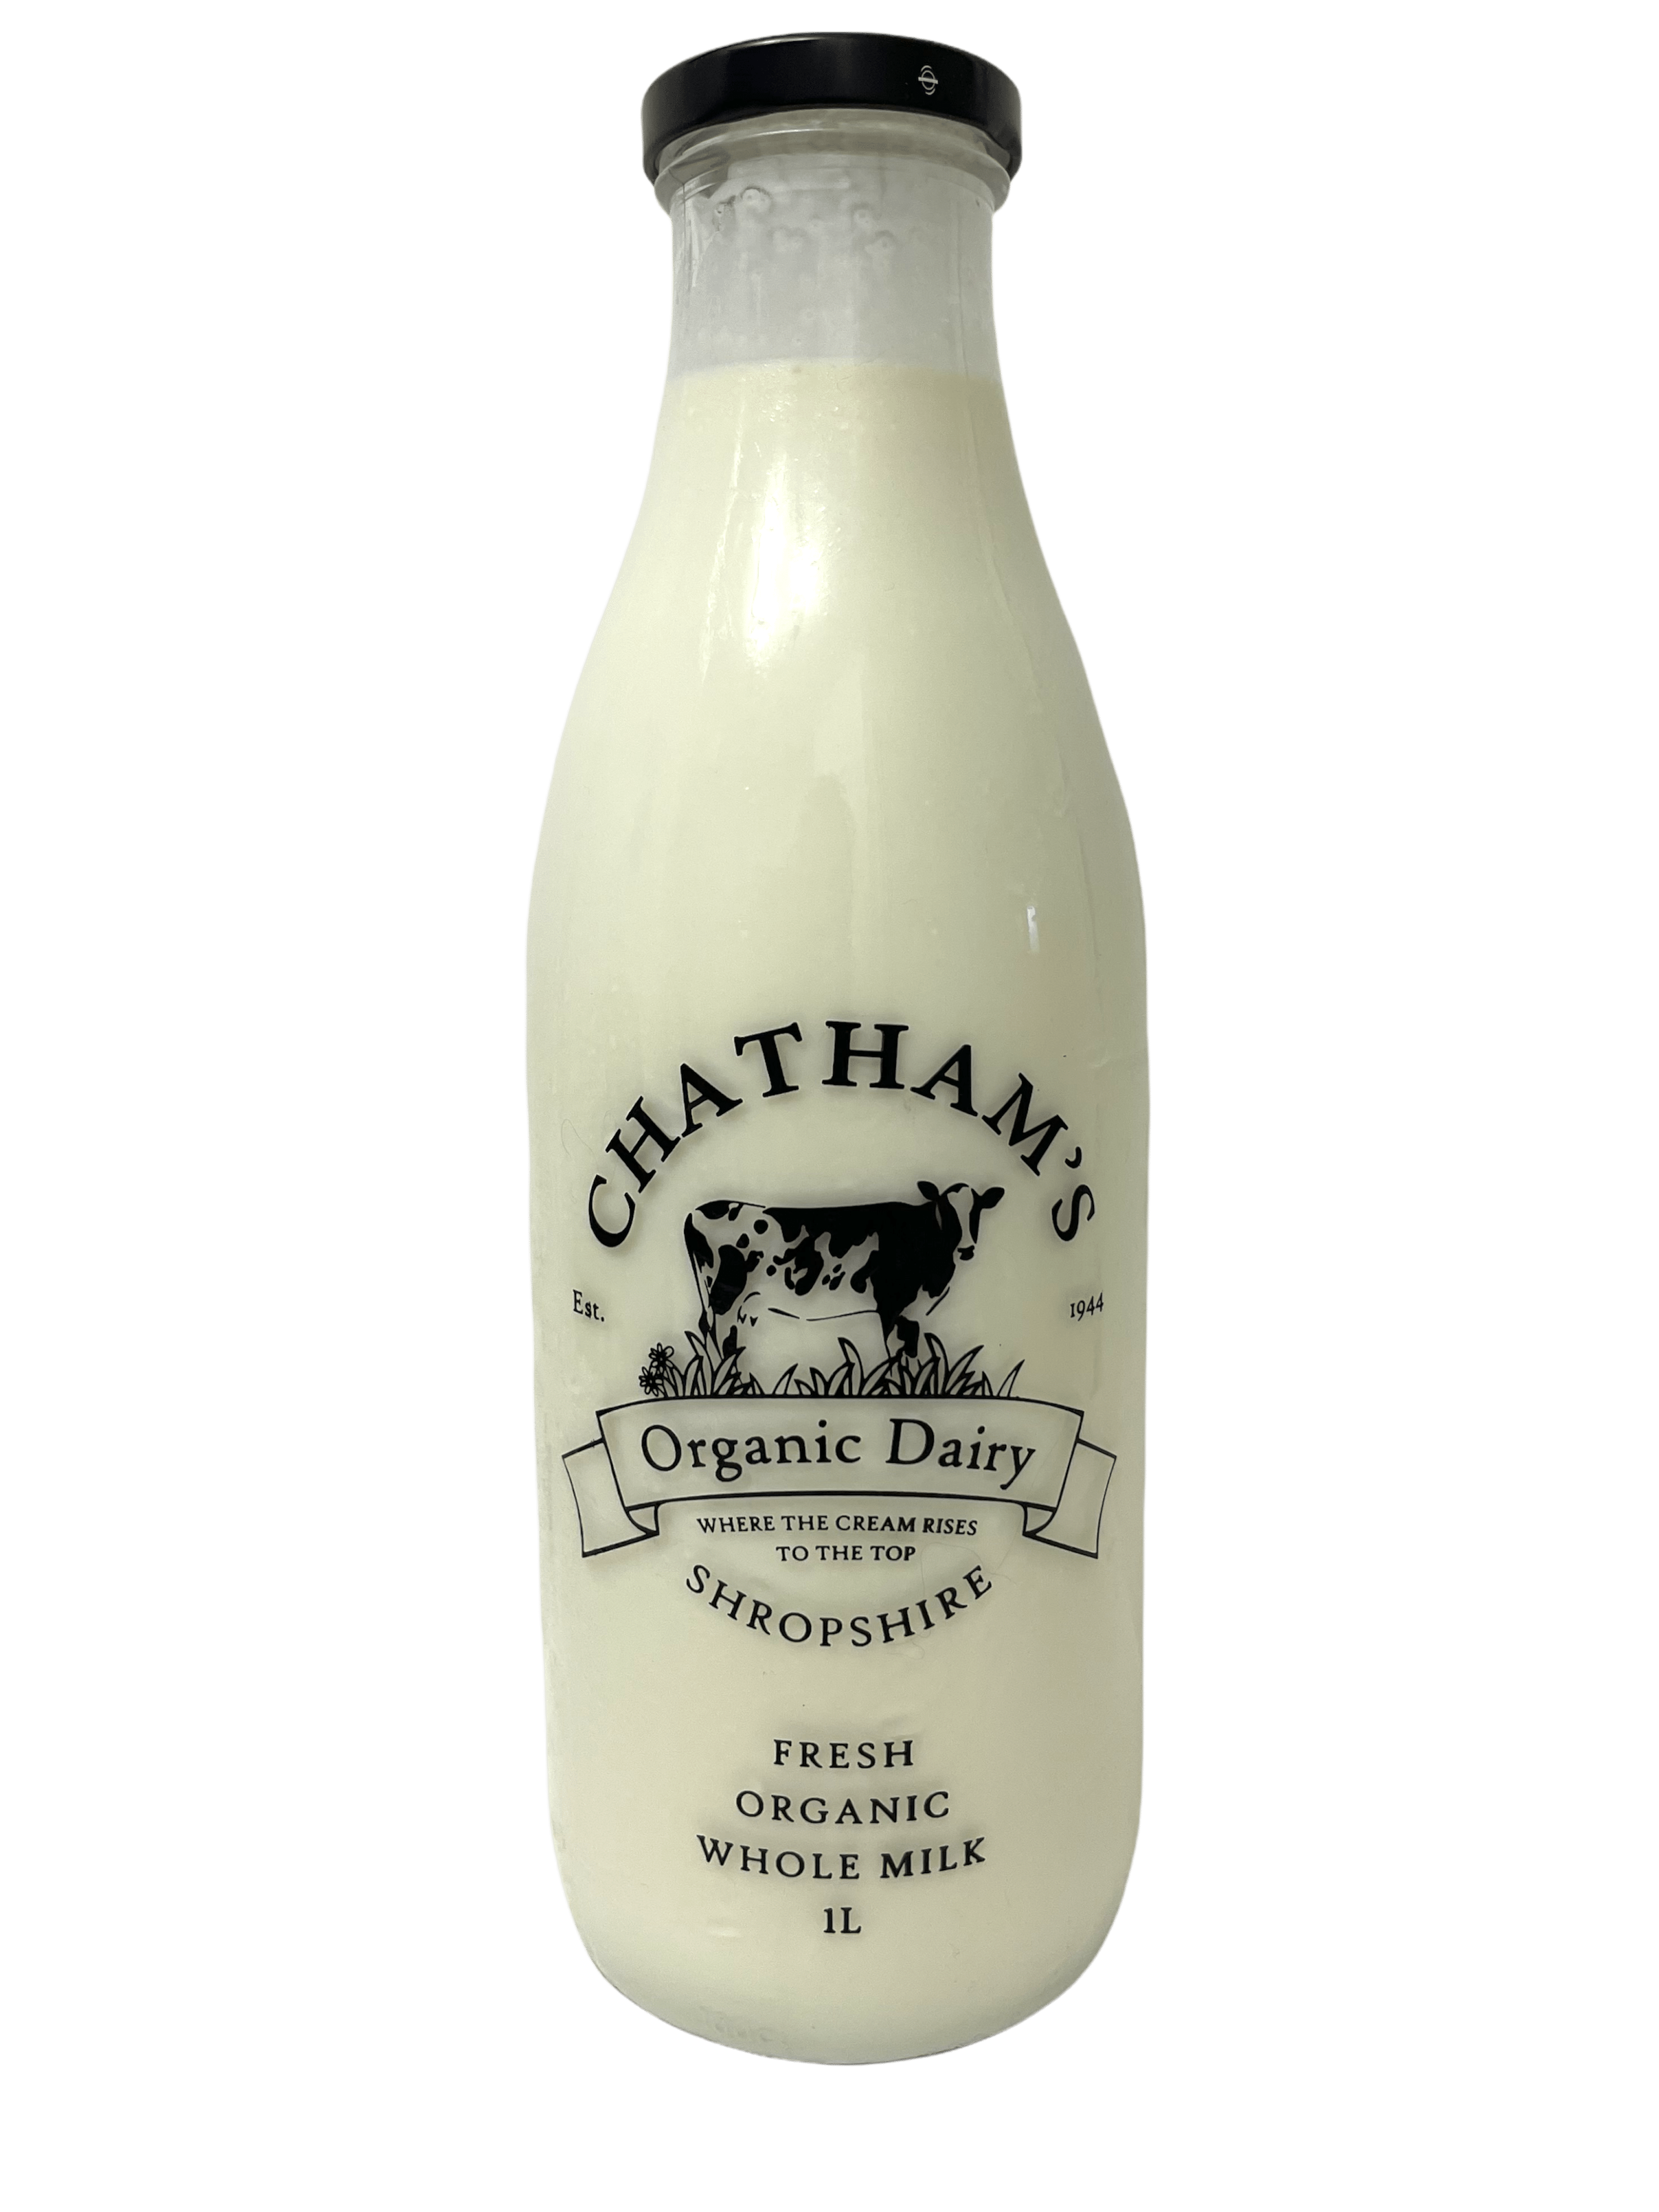 Chathams Organic Dairy - Kelis.info